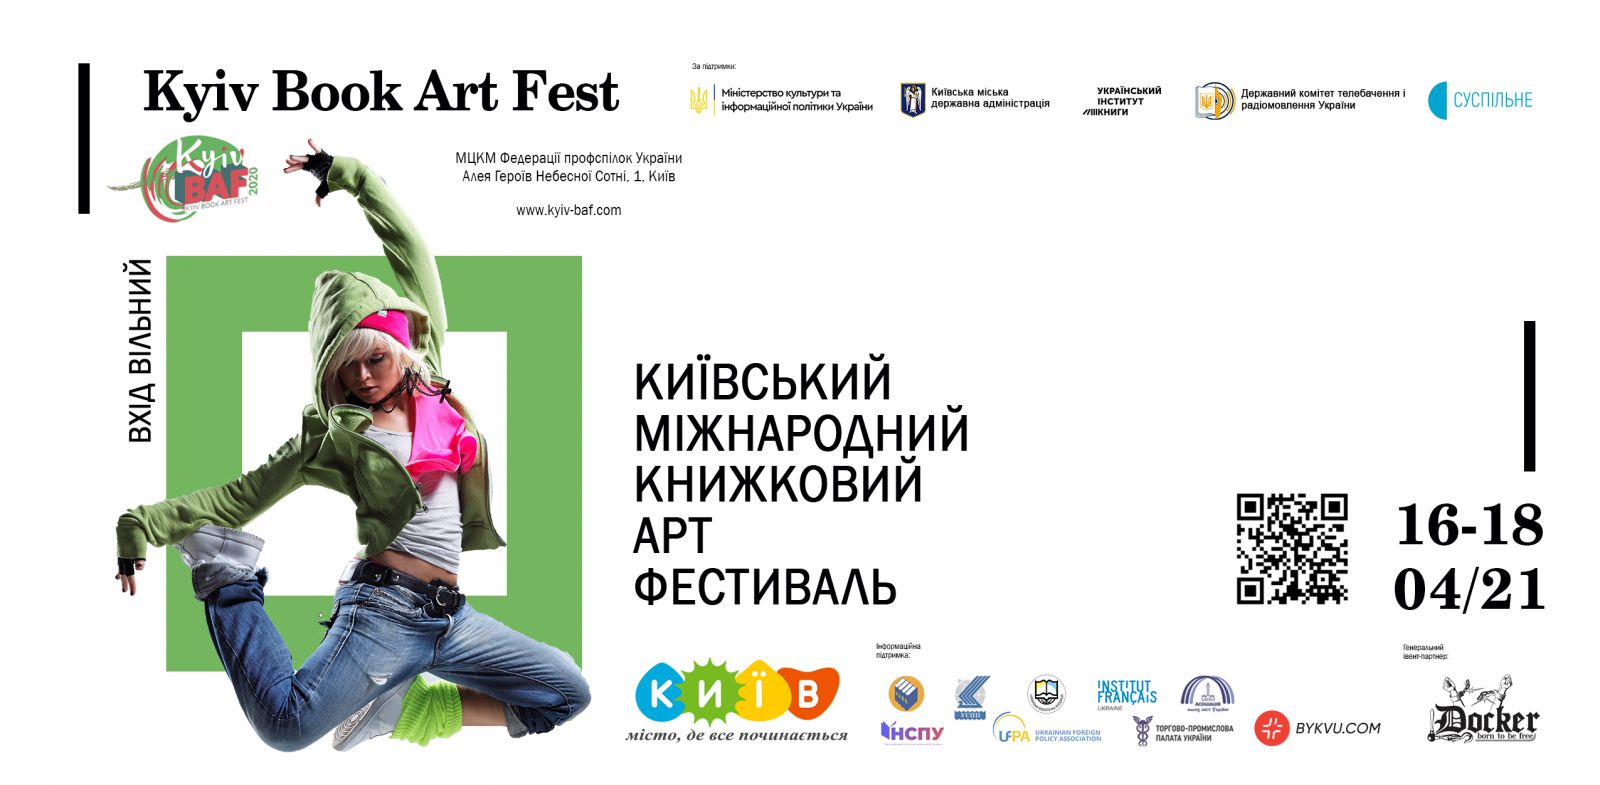 Kyiv Book Art Fest 2020